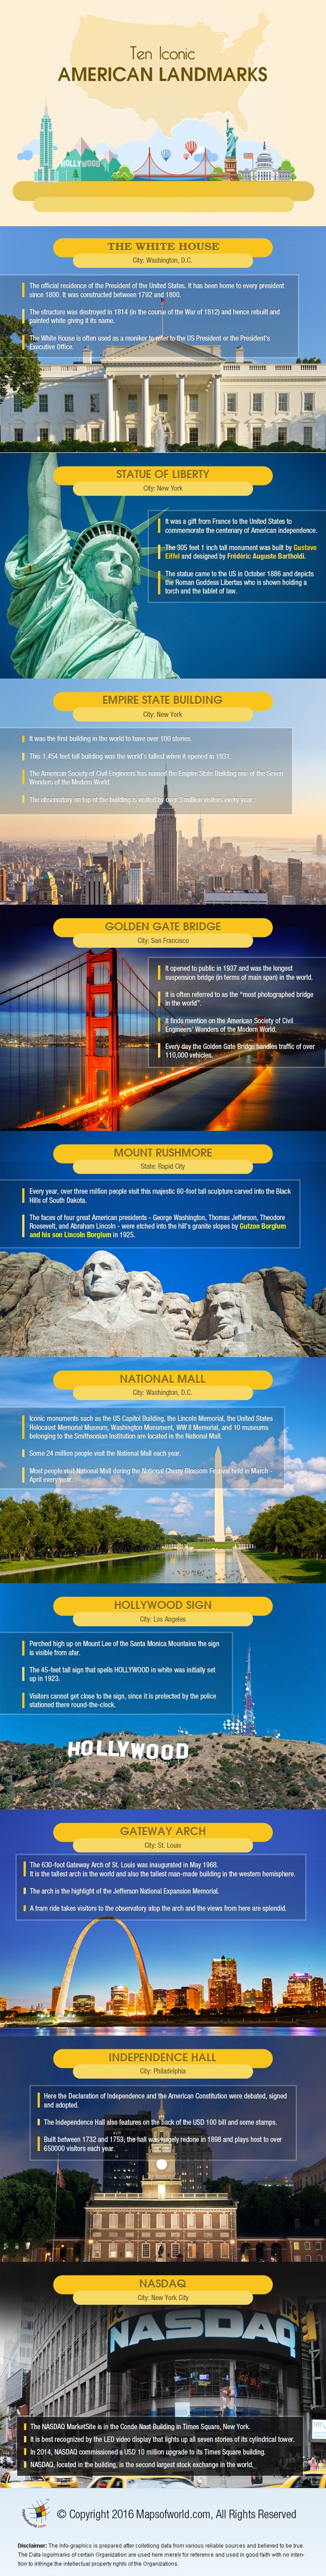 10 Iconic American Landmarks Infographic